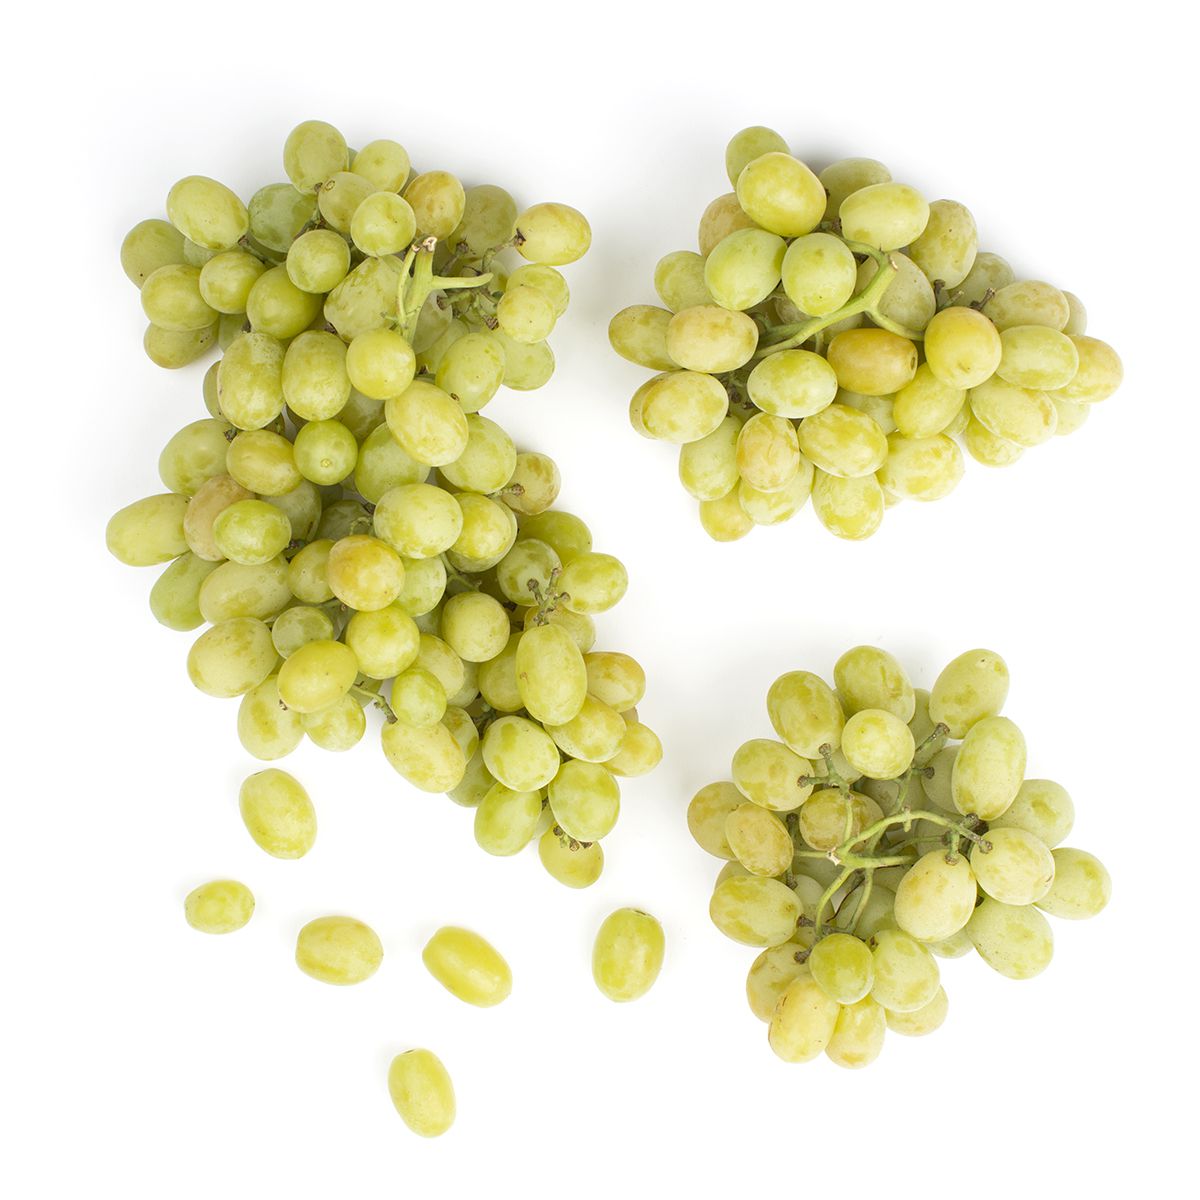 BoxNCase XL Premium Green Seedless Grapes